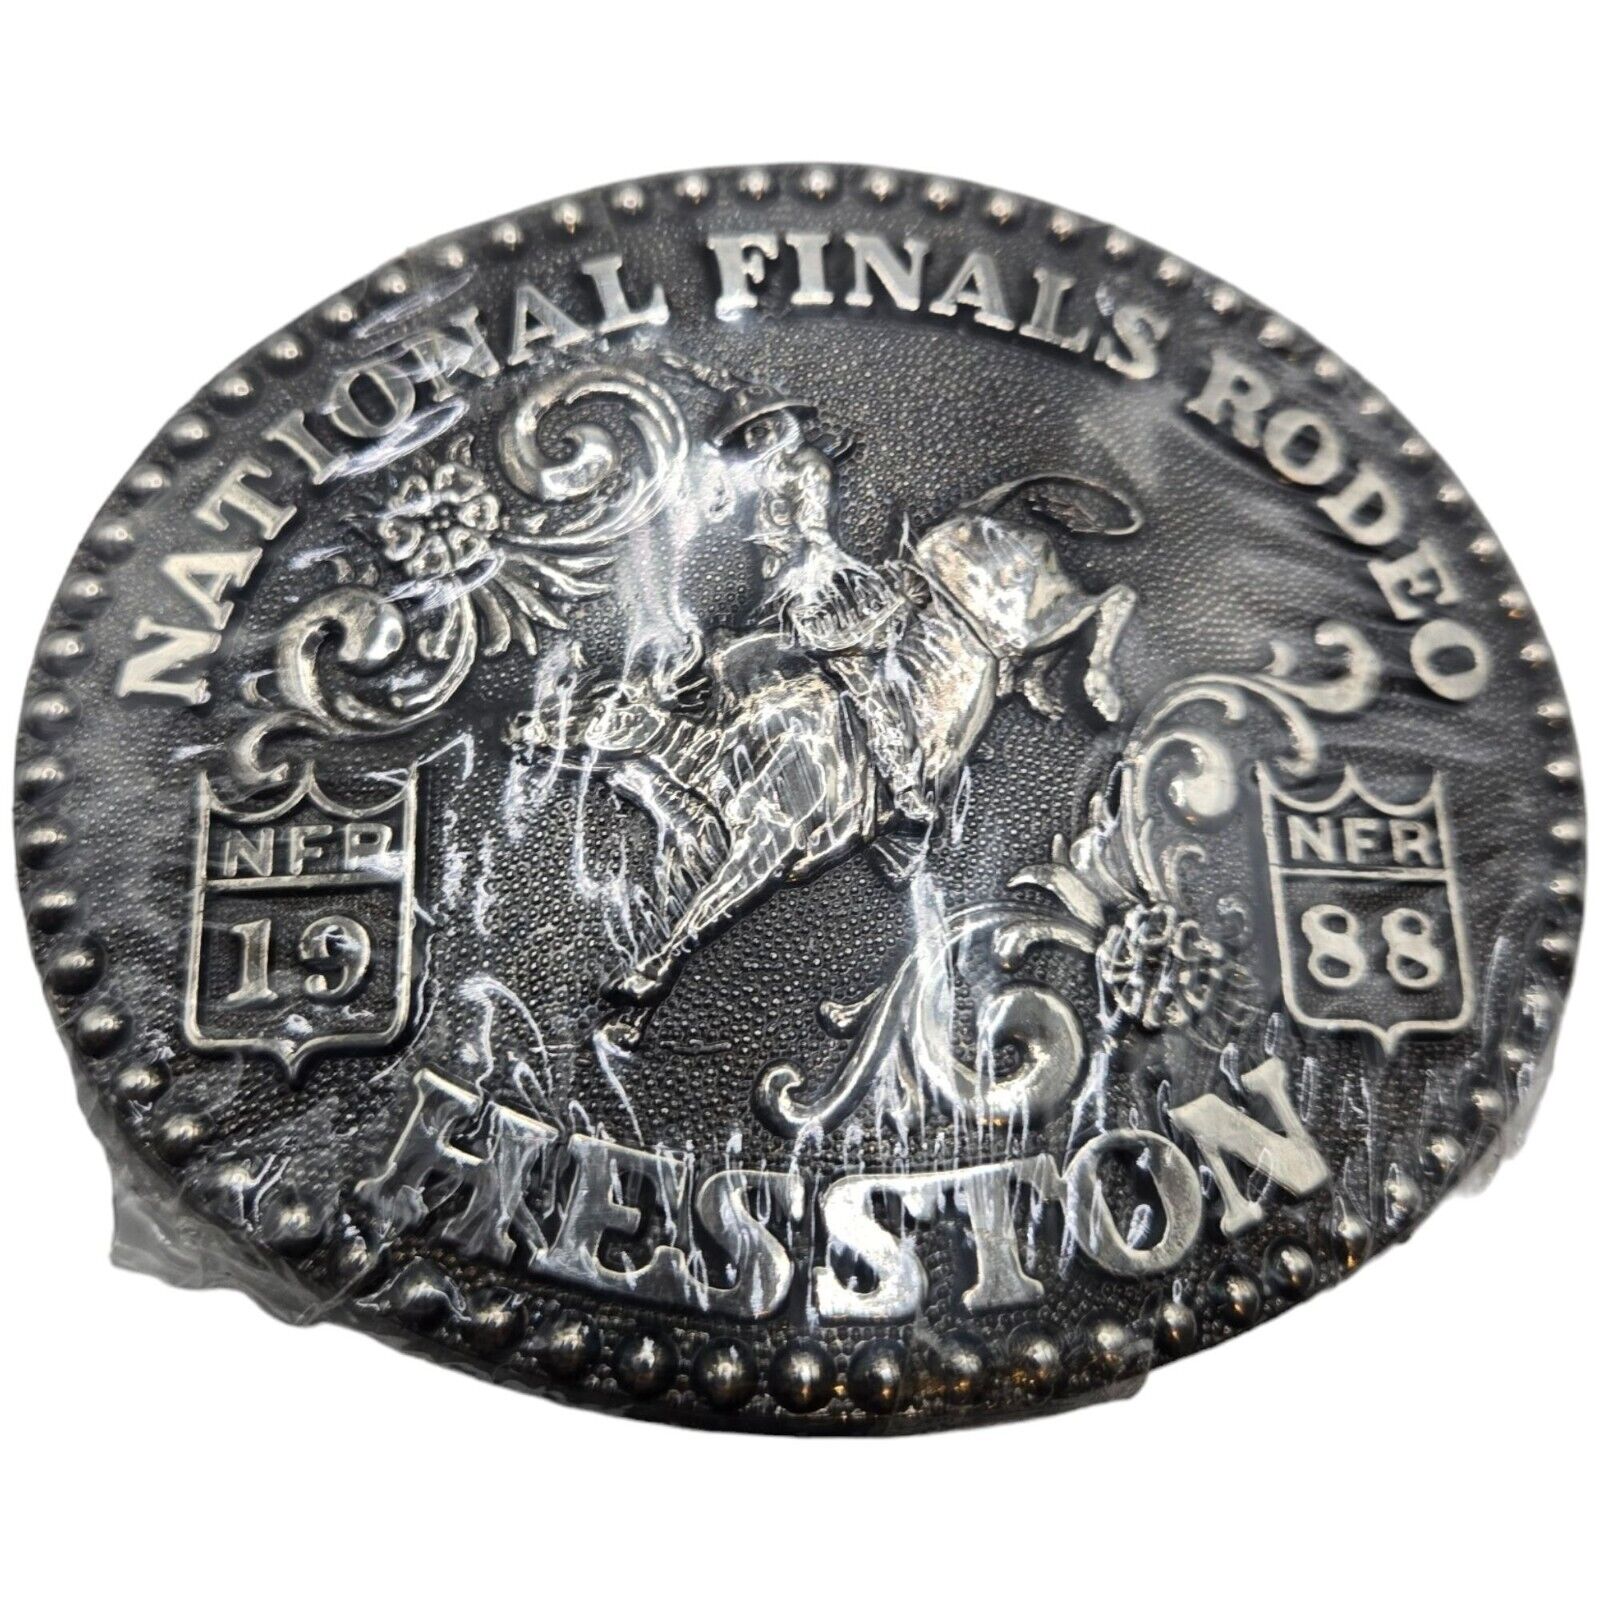 1988 National Finals Rodeo NFR Belt Buckle Bull Rider Hesston NOS Cowboy Vintage